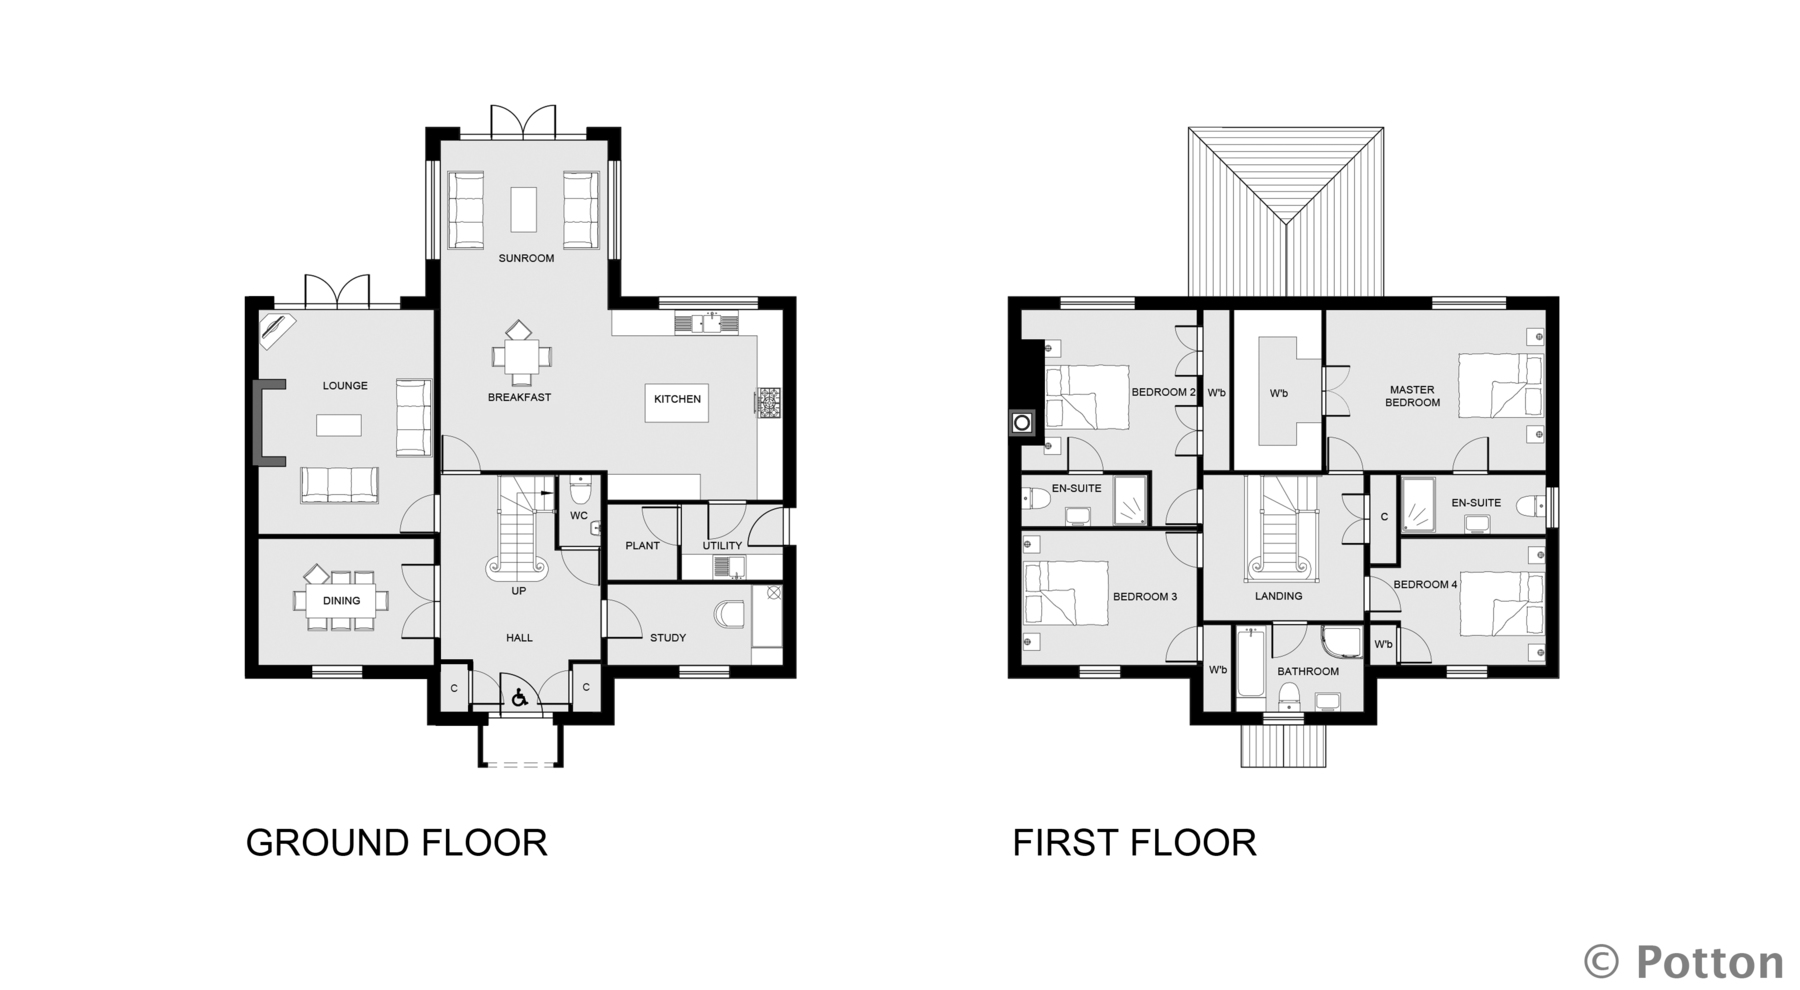 Cottage Floor Plans Uk - floorplans.click